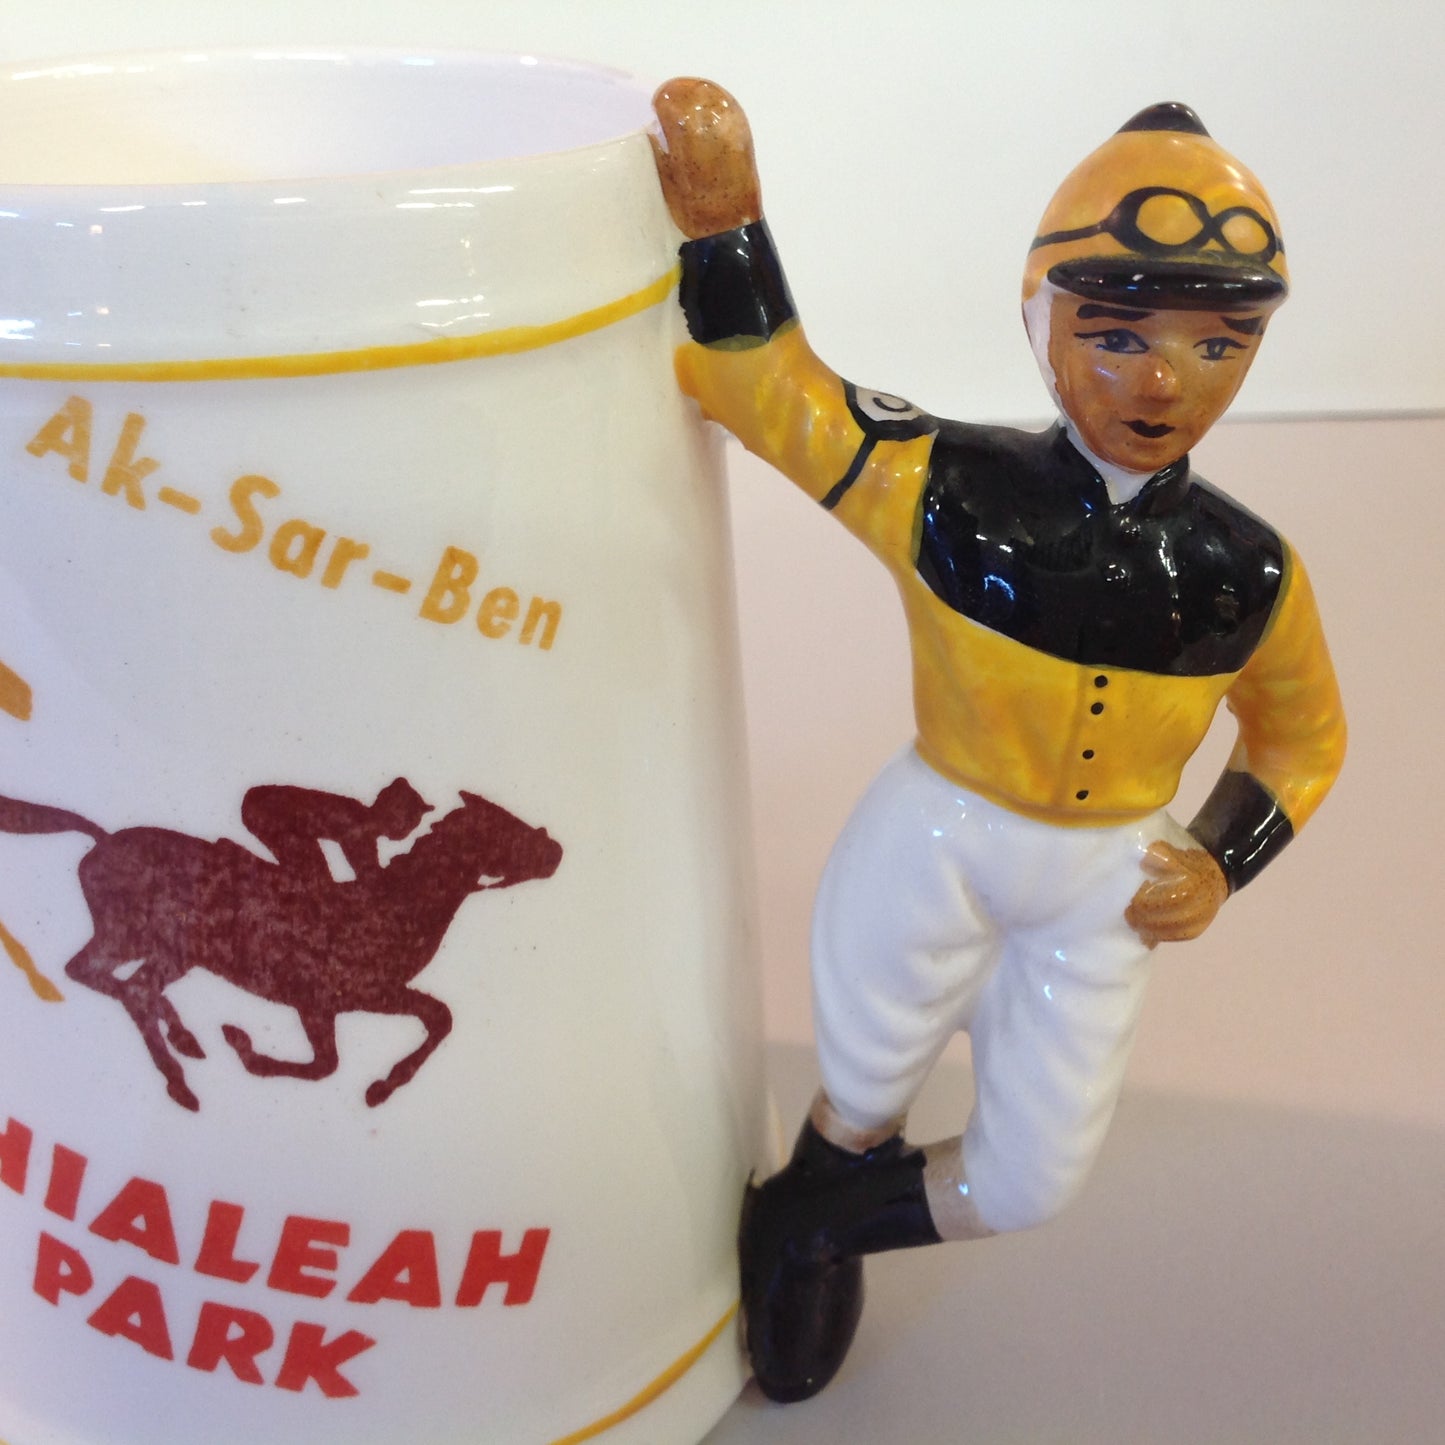 Vintage Souvenir Porcelain Horse Racing Mug Gold Jockey #3 Race Parks Logos